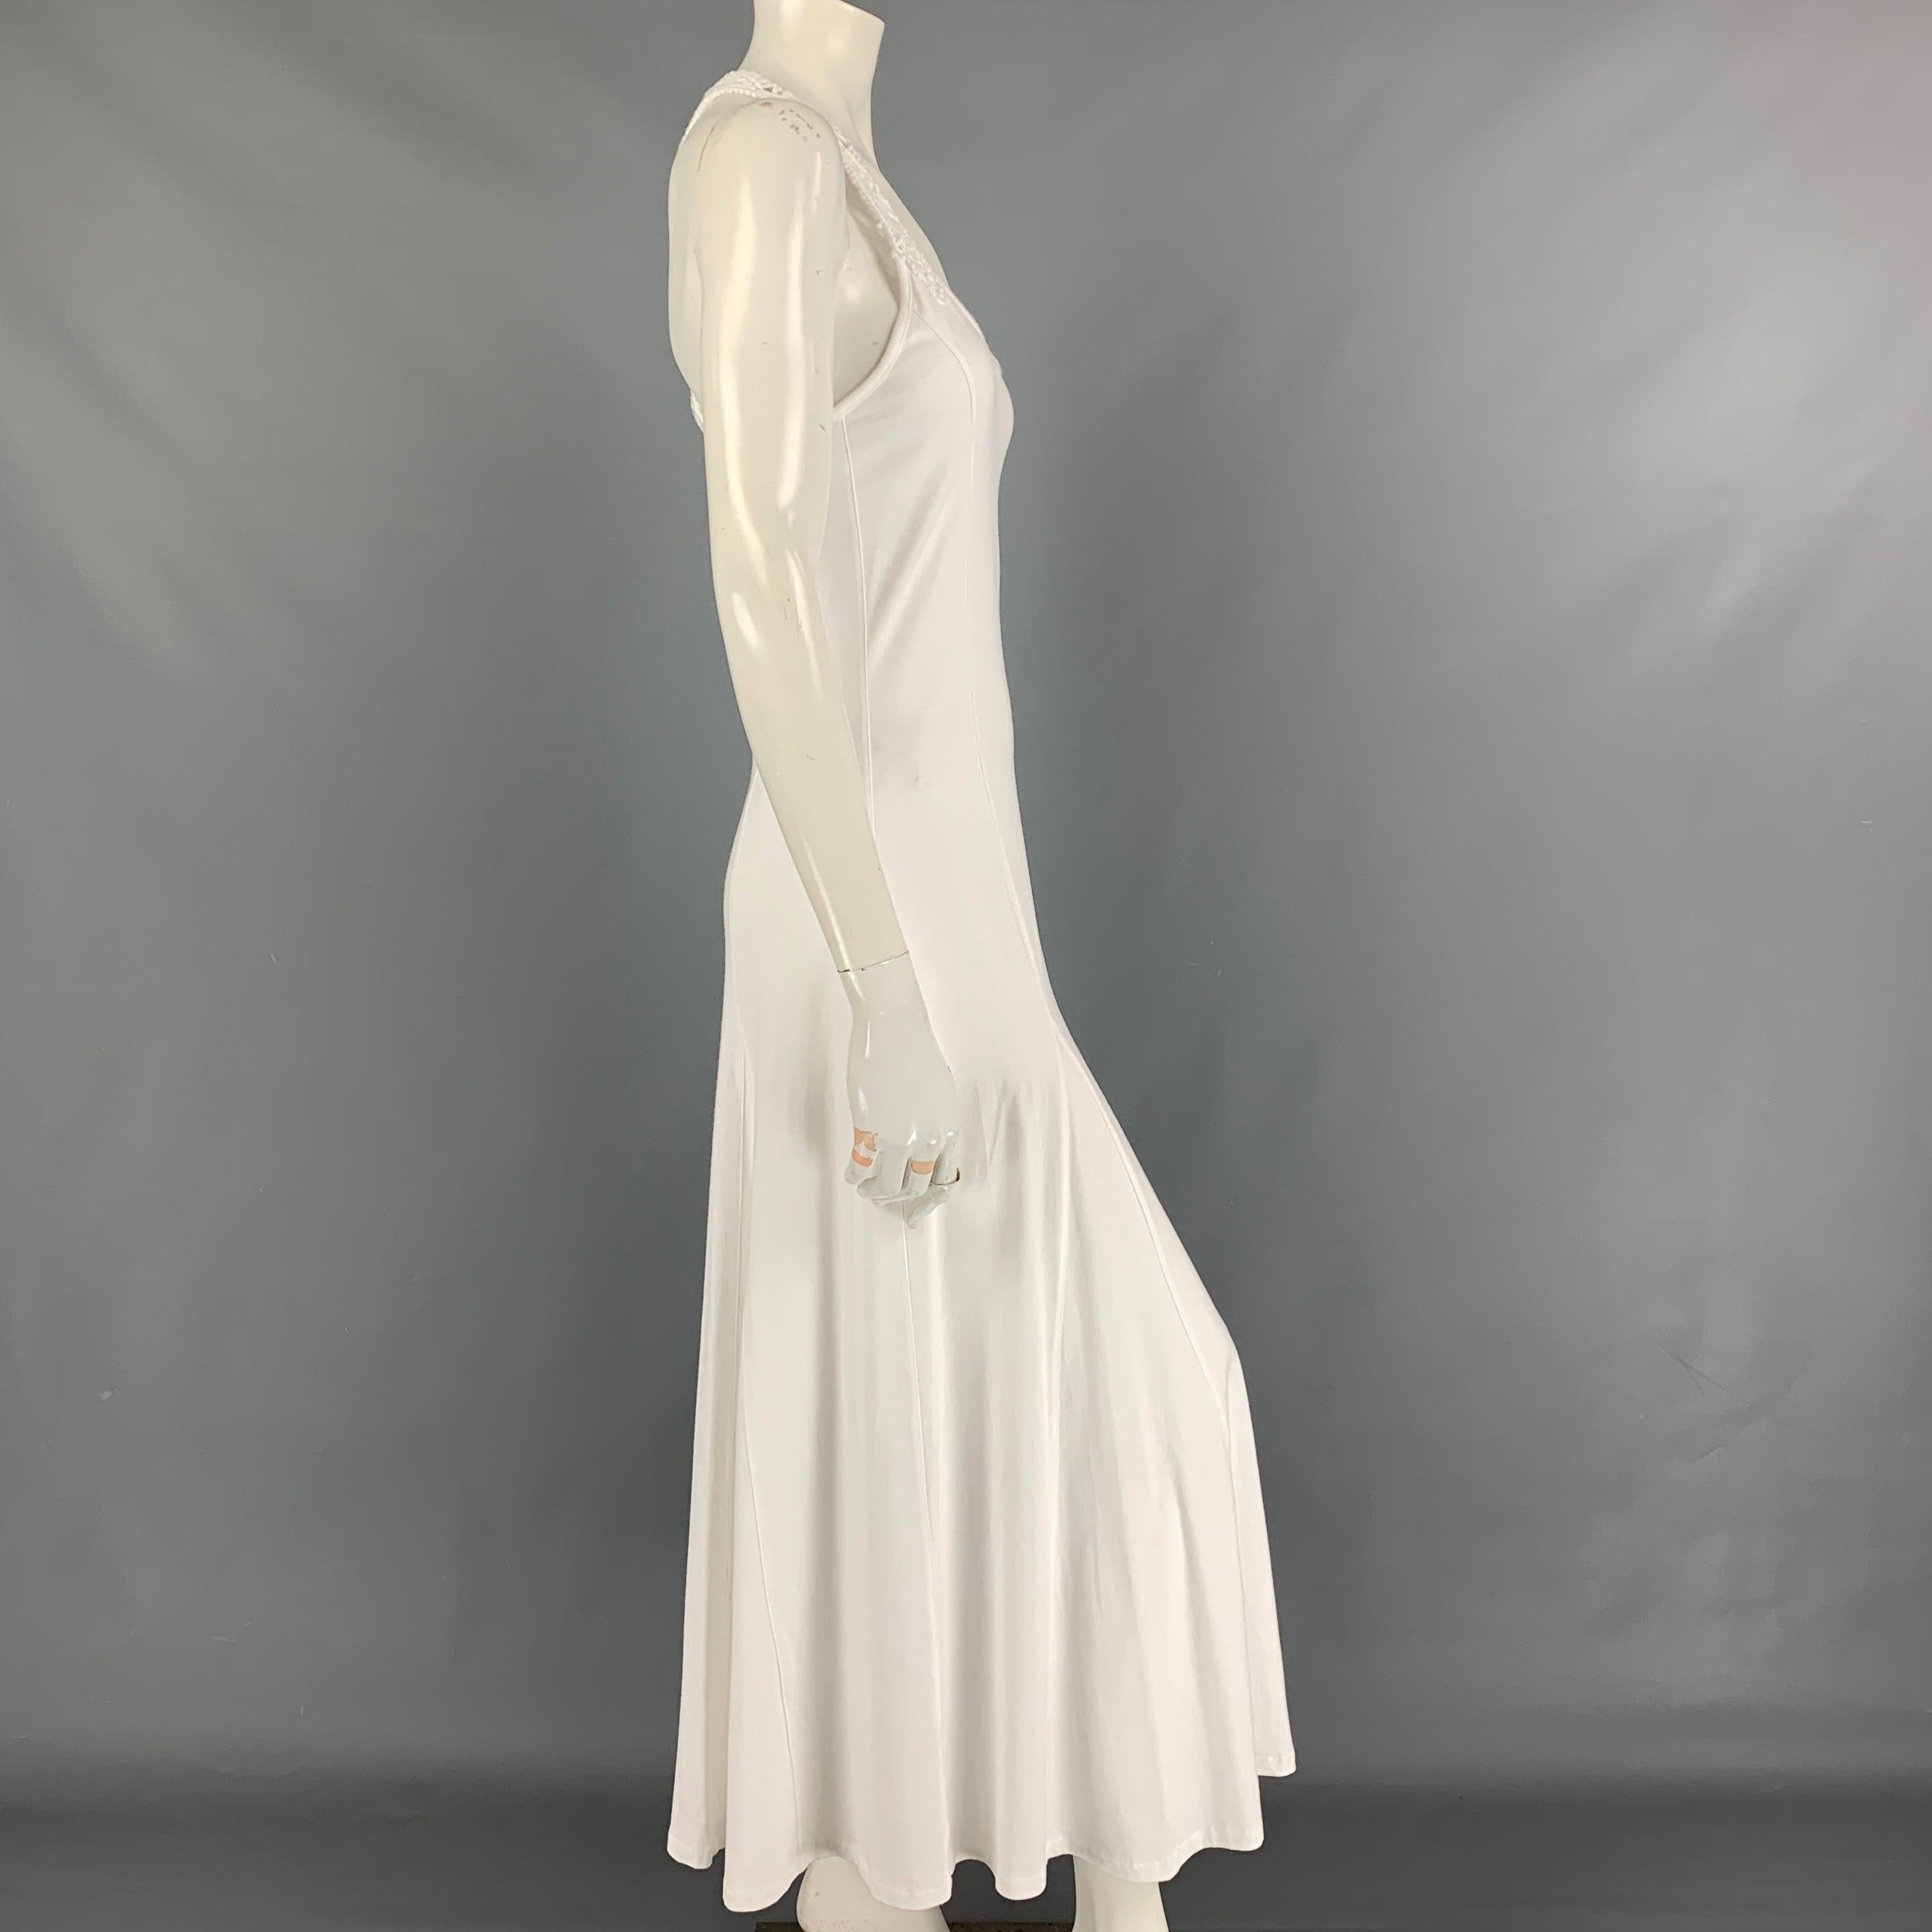 RALPH LAUREN Black Label Size M White Cotton Crochet Racerback Long Dress In Good Condition For Sale In San Francisco, CA